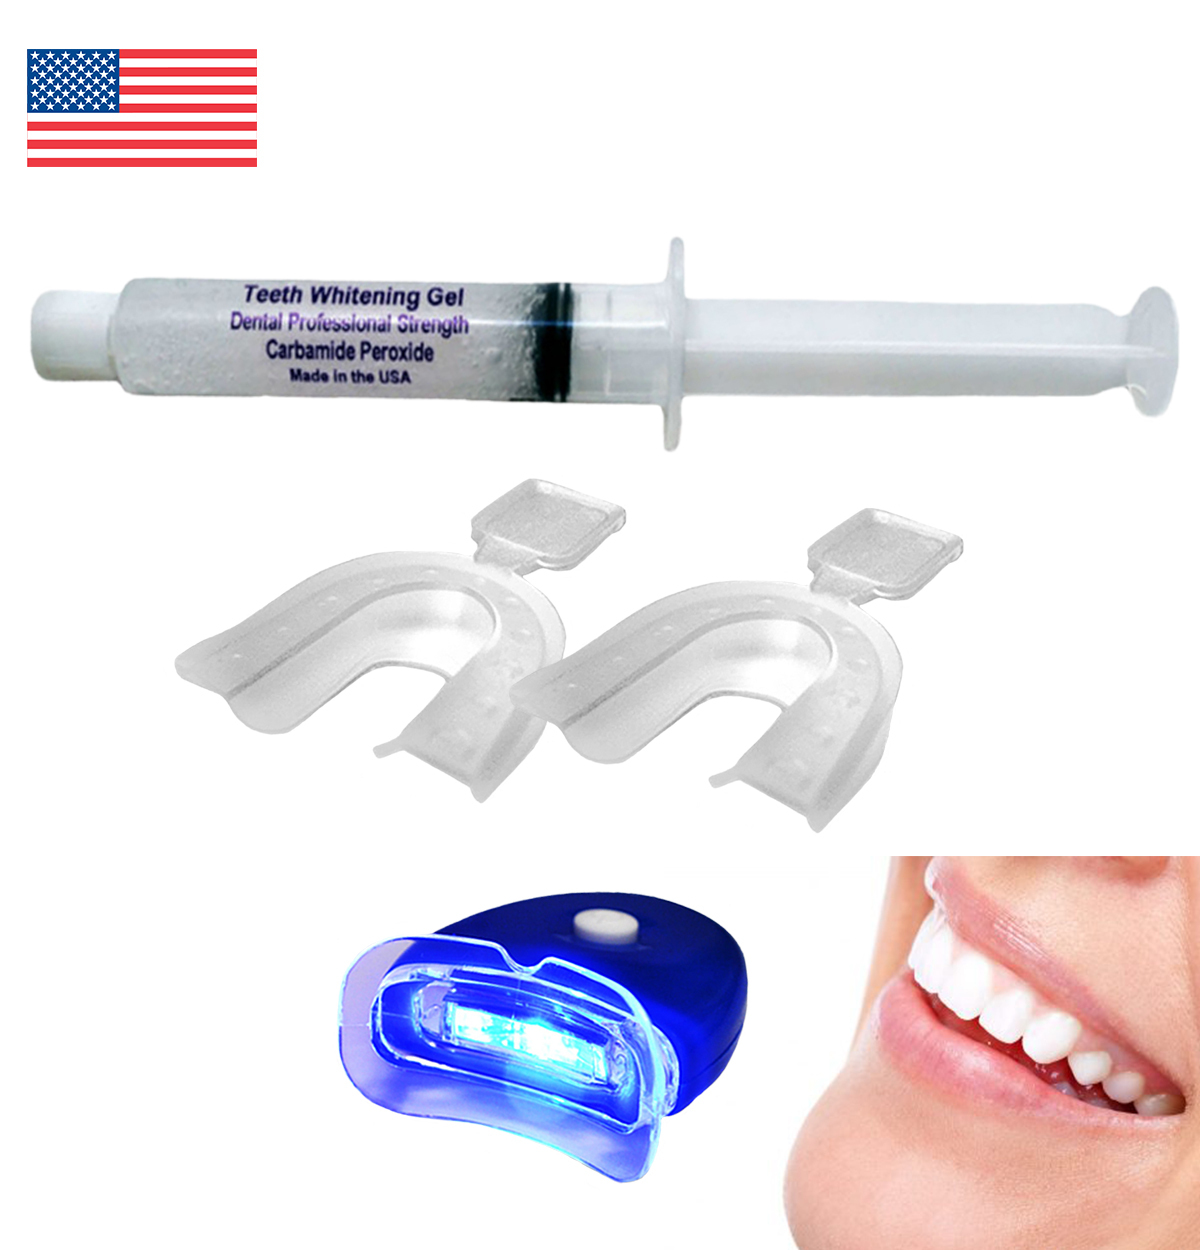 Professional Dental Strength Kit - 44% CP Teeth Whitening Gel Huge 10cc Syringe  - $10.95